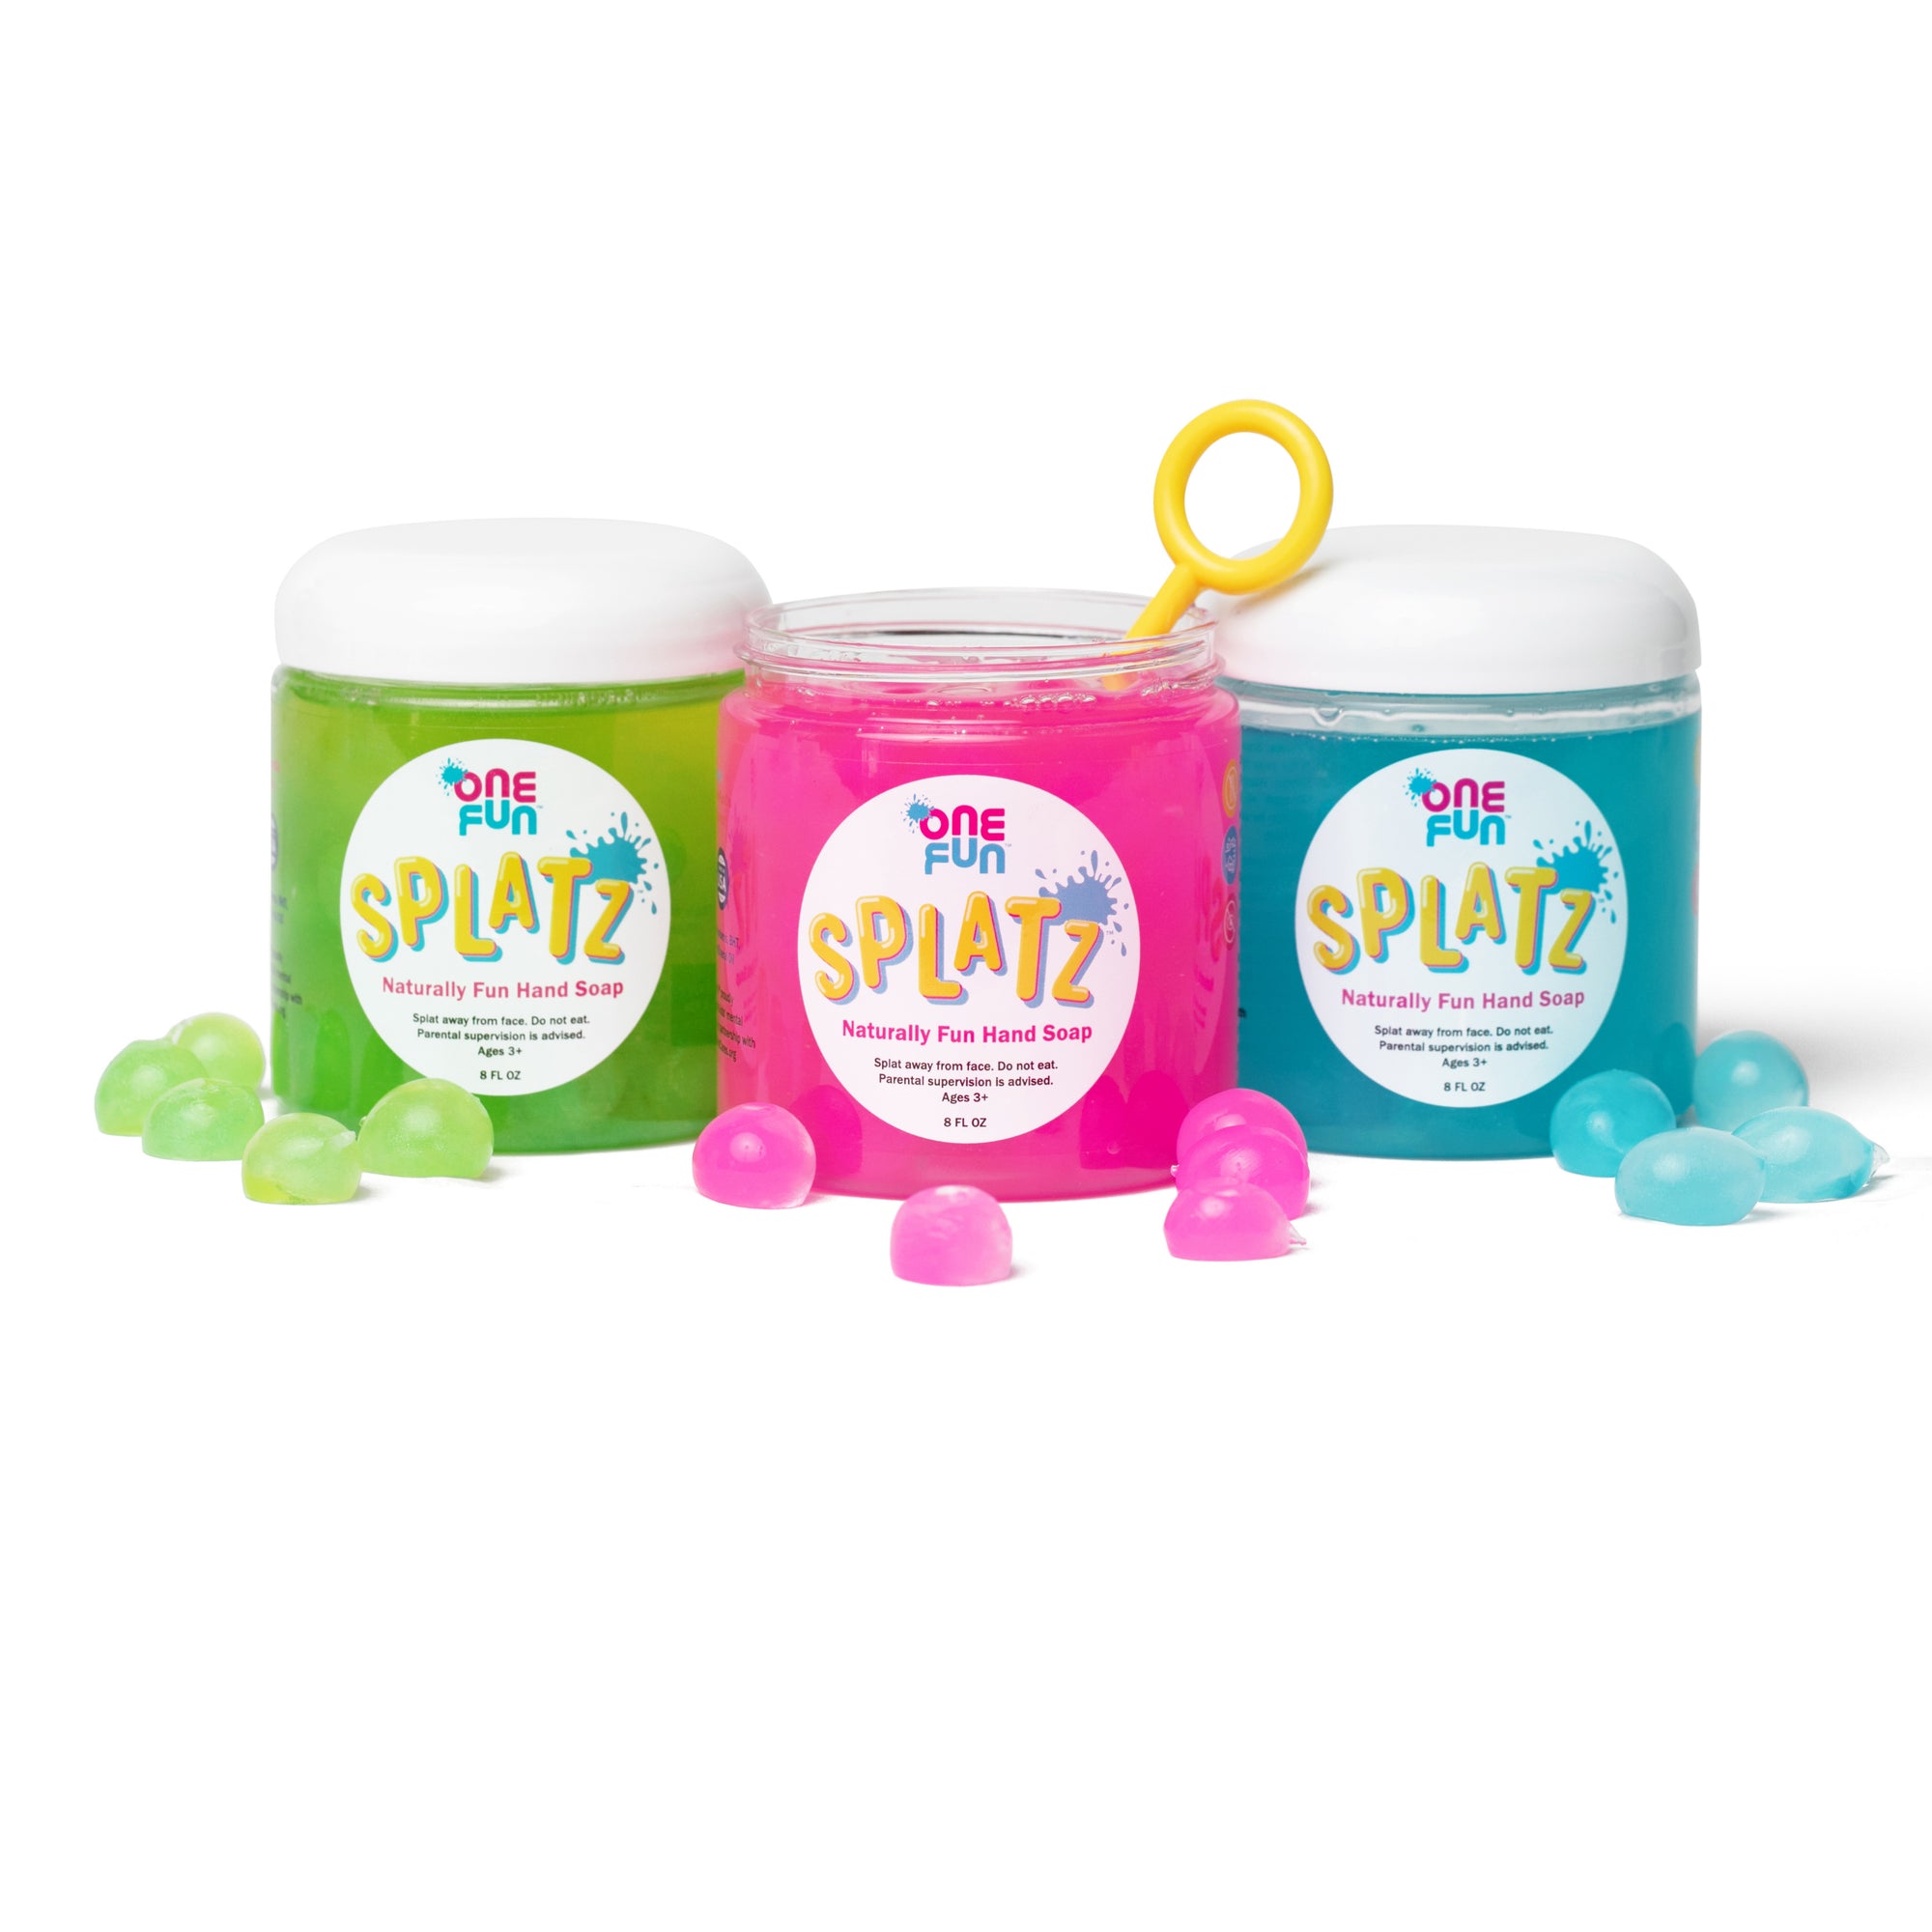 SPLATZ Naturally Fun Hand Soap - Wholesale Case Pack (6 Units)